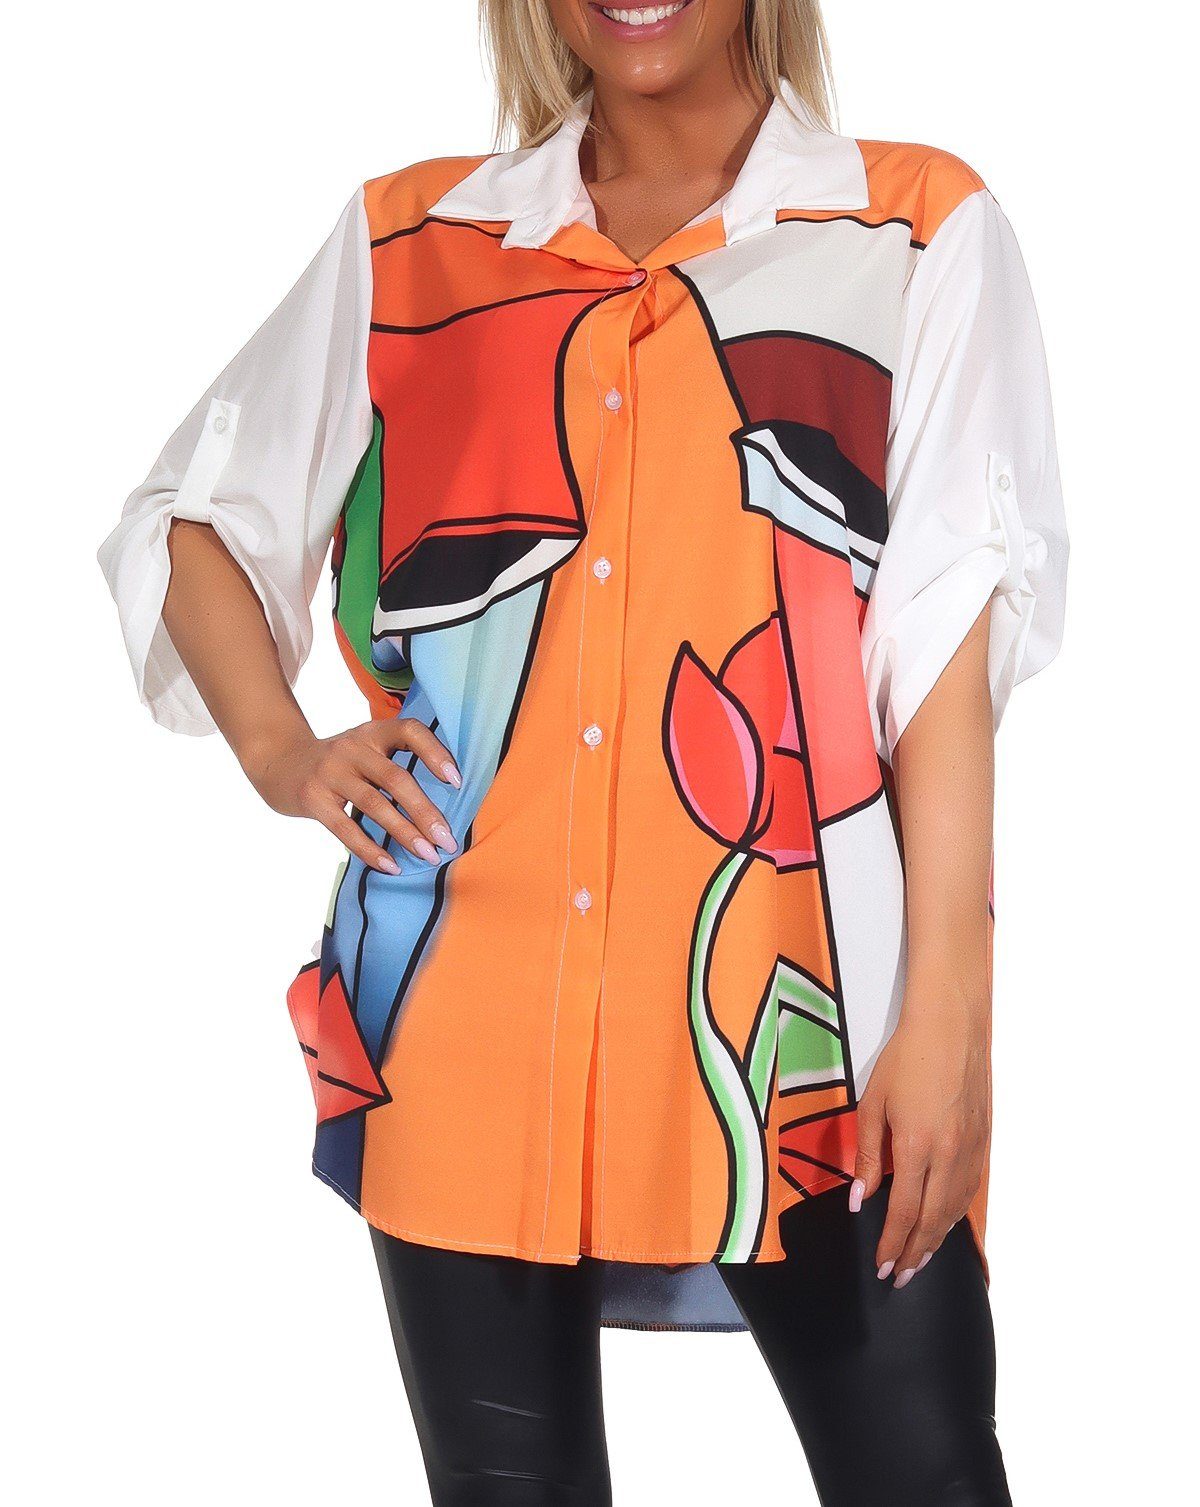 Mississhop Hemdbluse Damen Hemdbluse mit modernem Print Bluse Freizeit M. 376 Model 1 | Hemdblusen